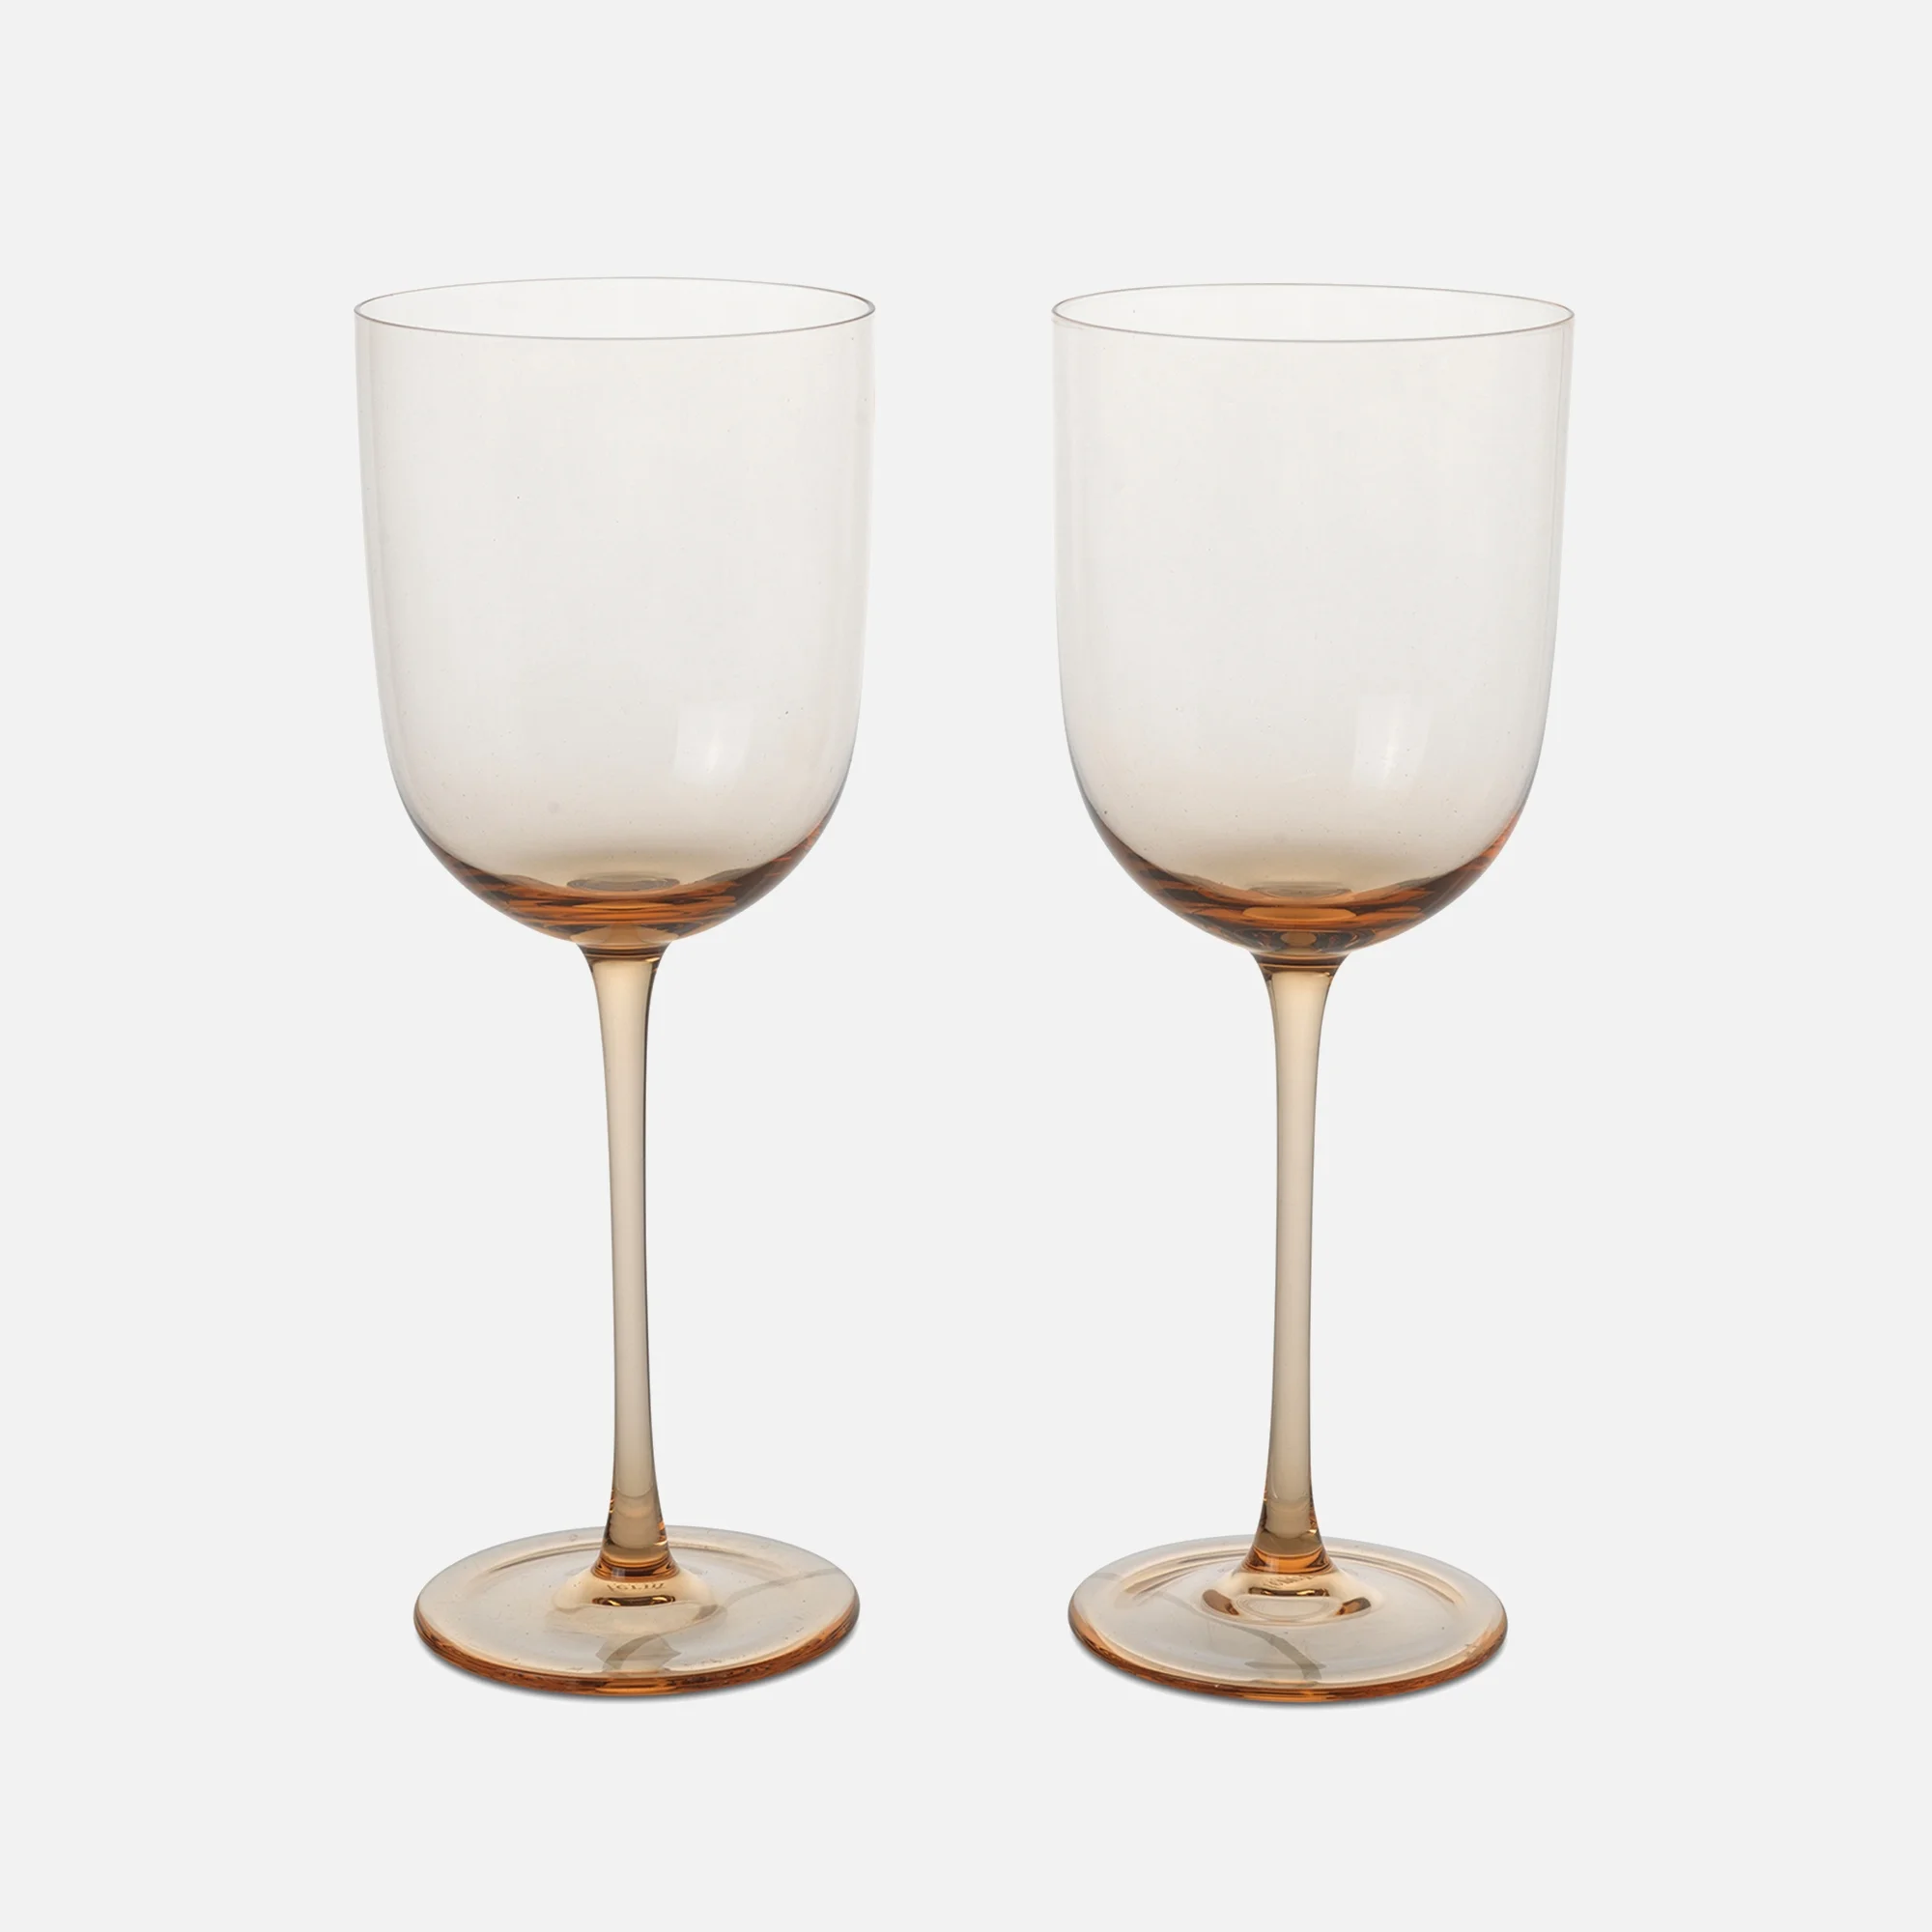 Ferm Living Host Red Wine Glasses - Set of 2 - Blush Image 1